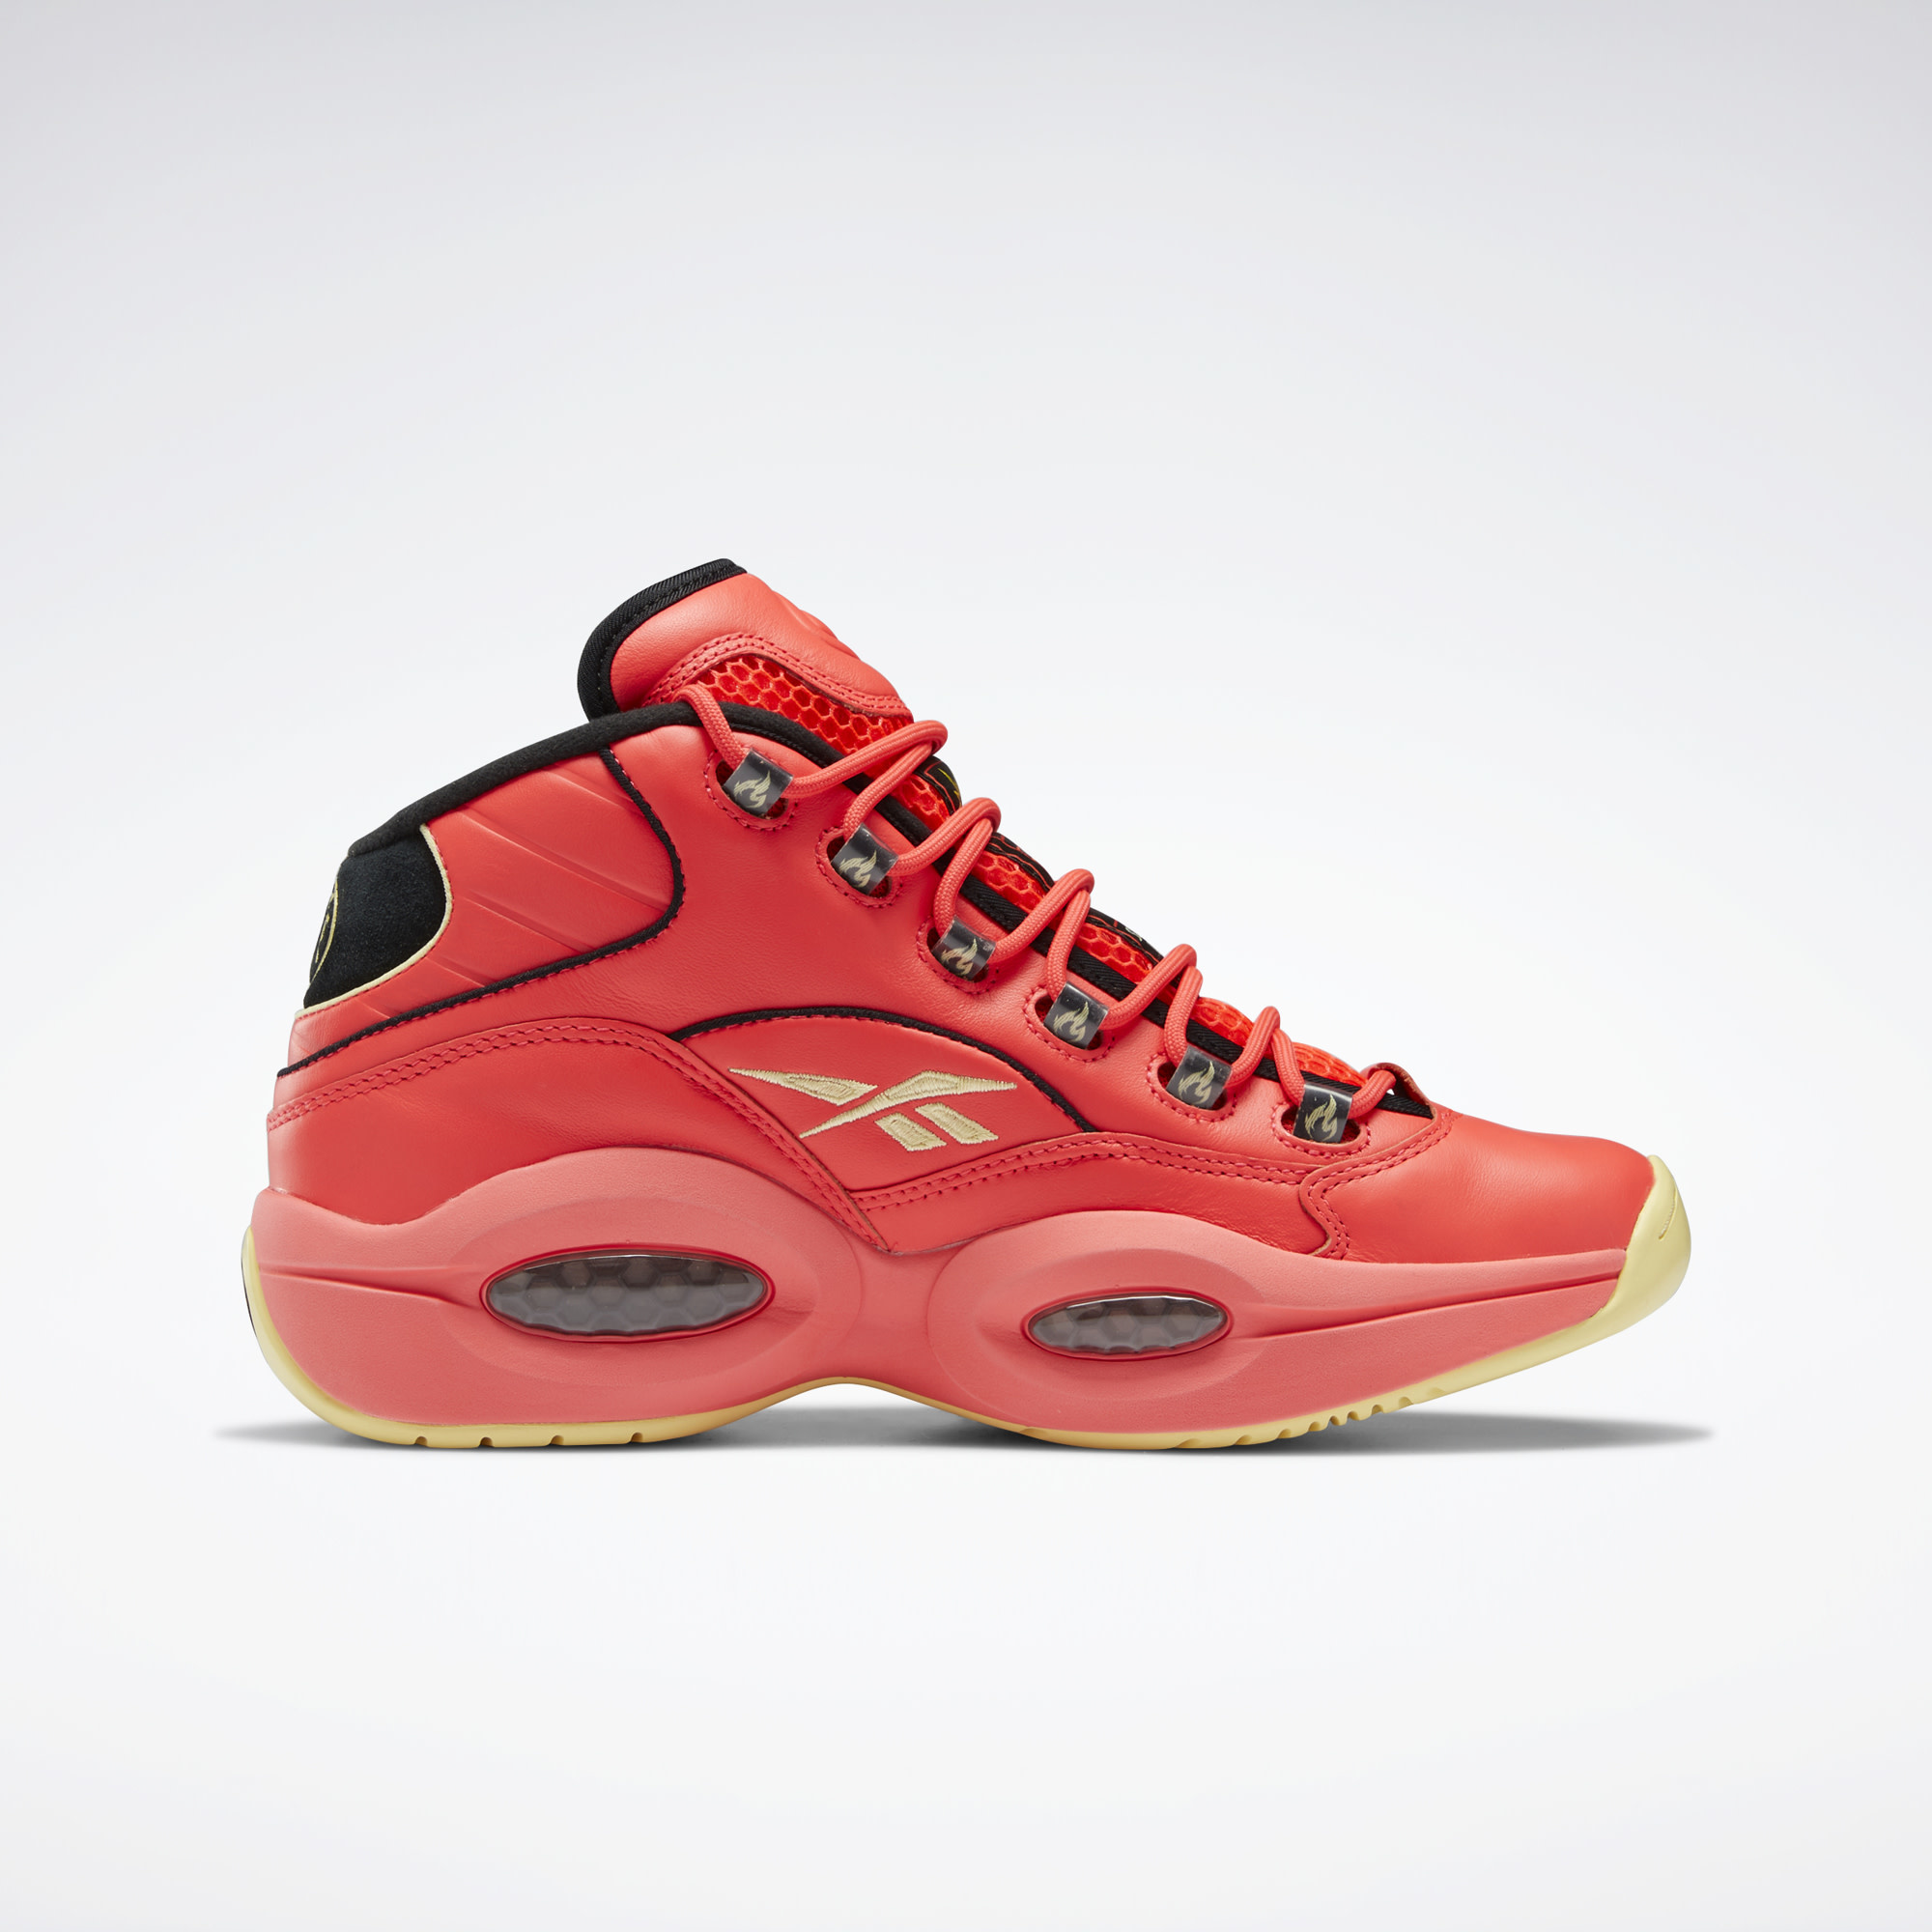 Reebok Question Mid Allen Iverson Men's Basketball Shoe Size 11.5